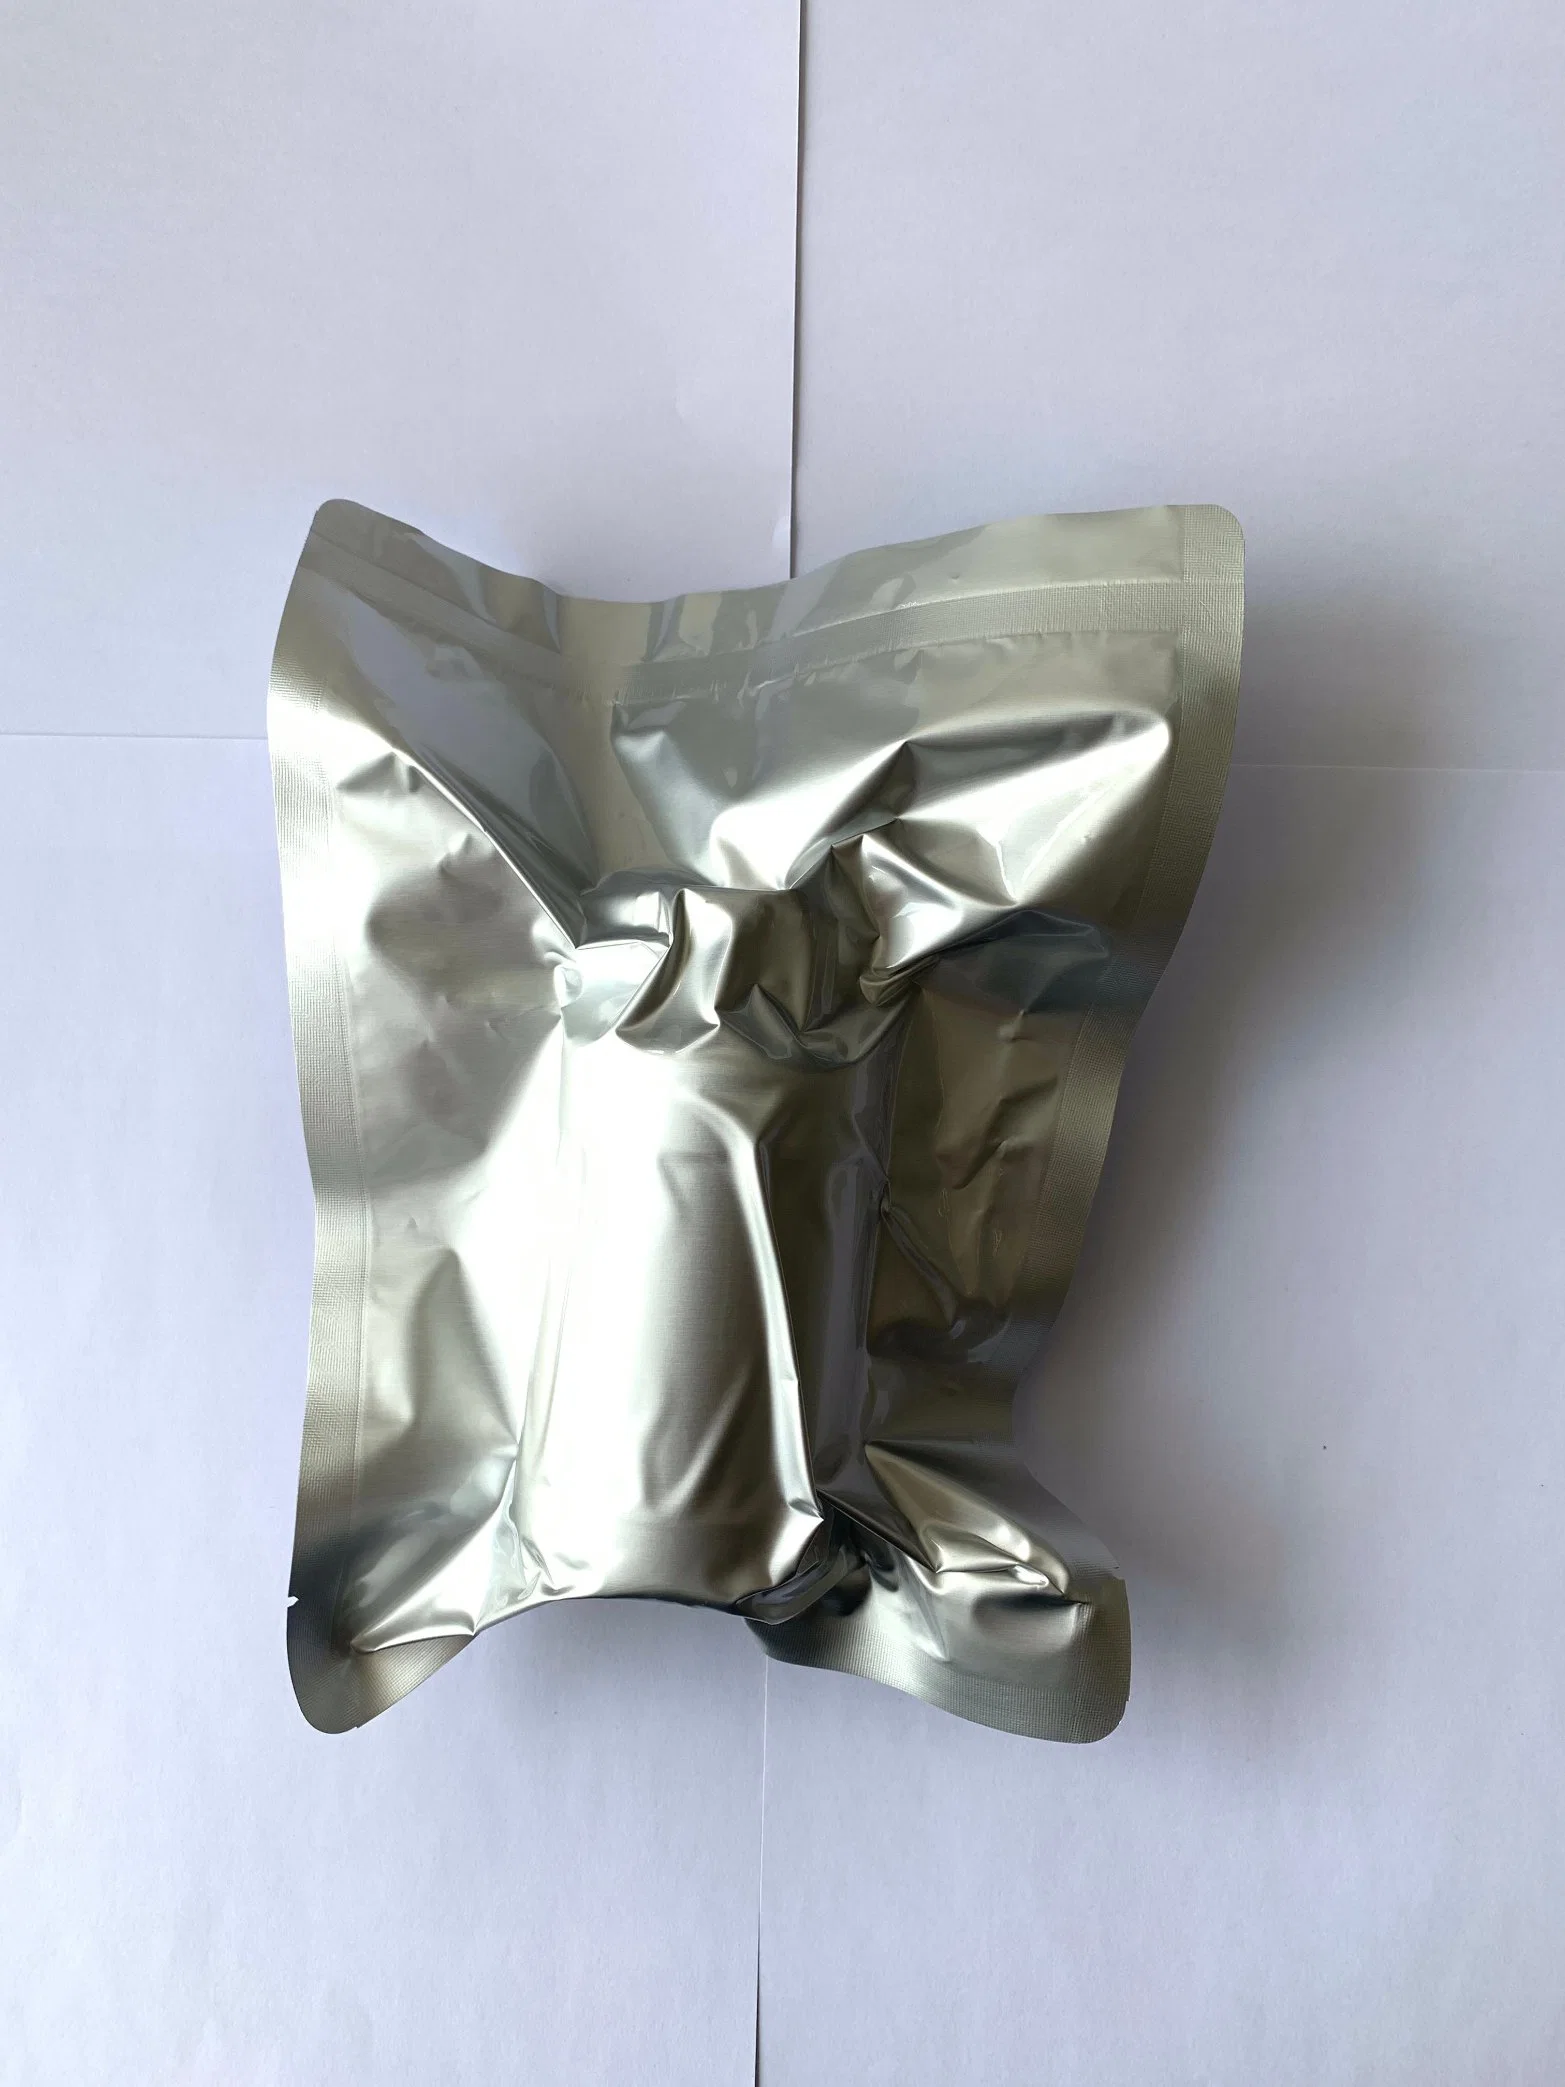 Alta Pureza Cloreto Diallyldimethylammonium com 60% de pureza CAS 7398-69-8 Dmdaac